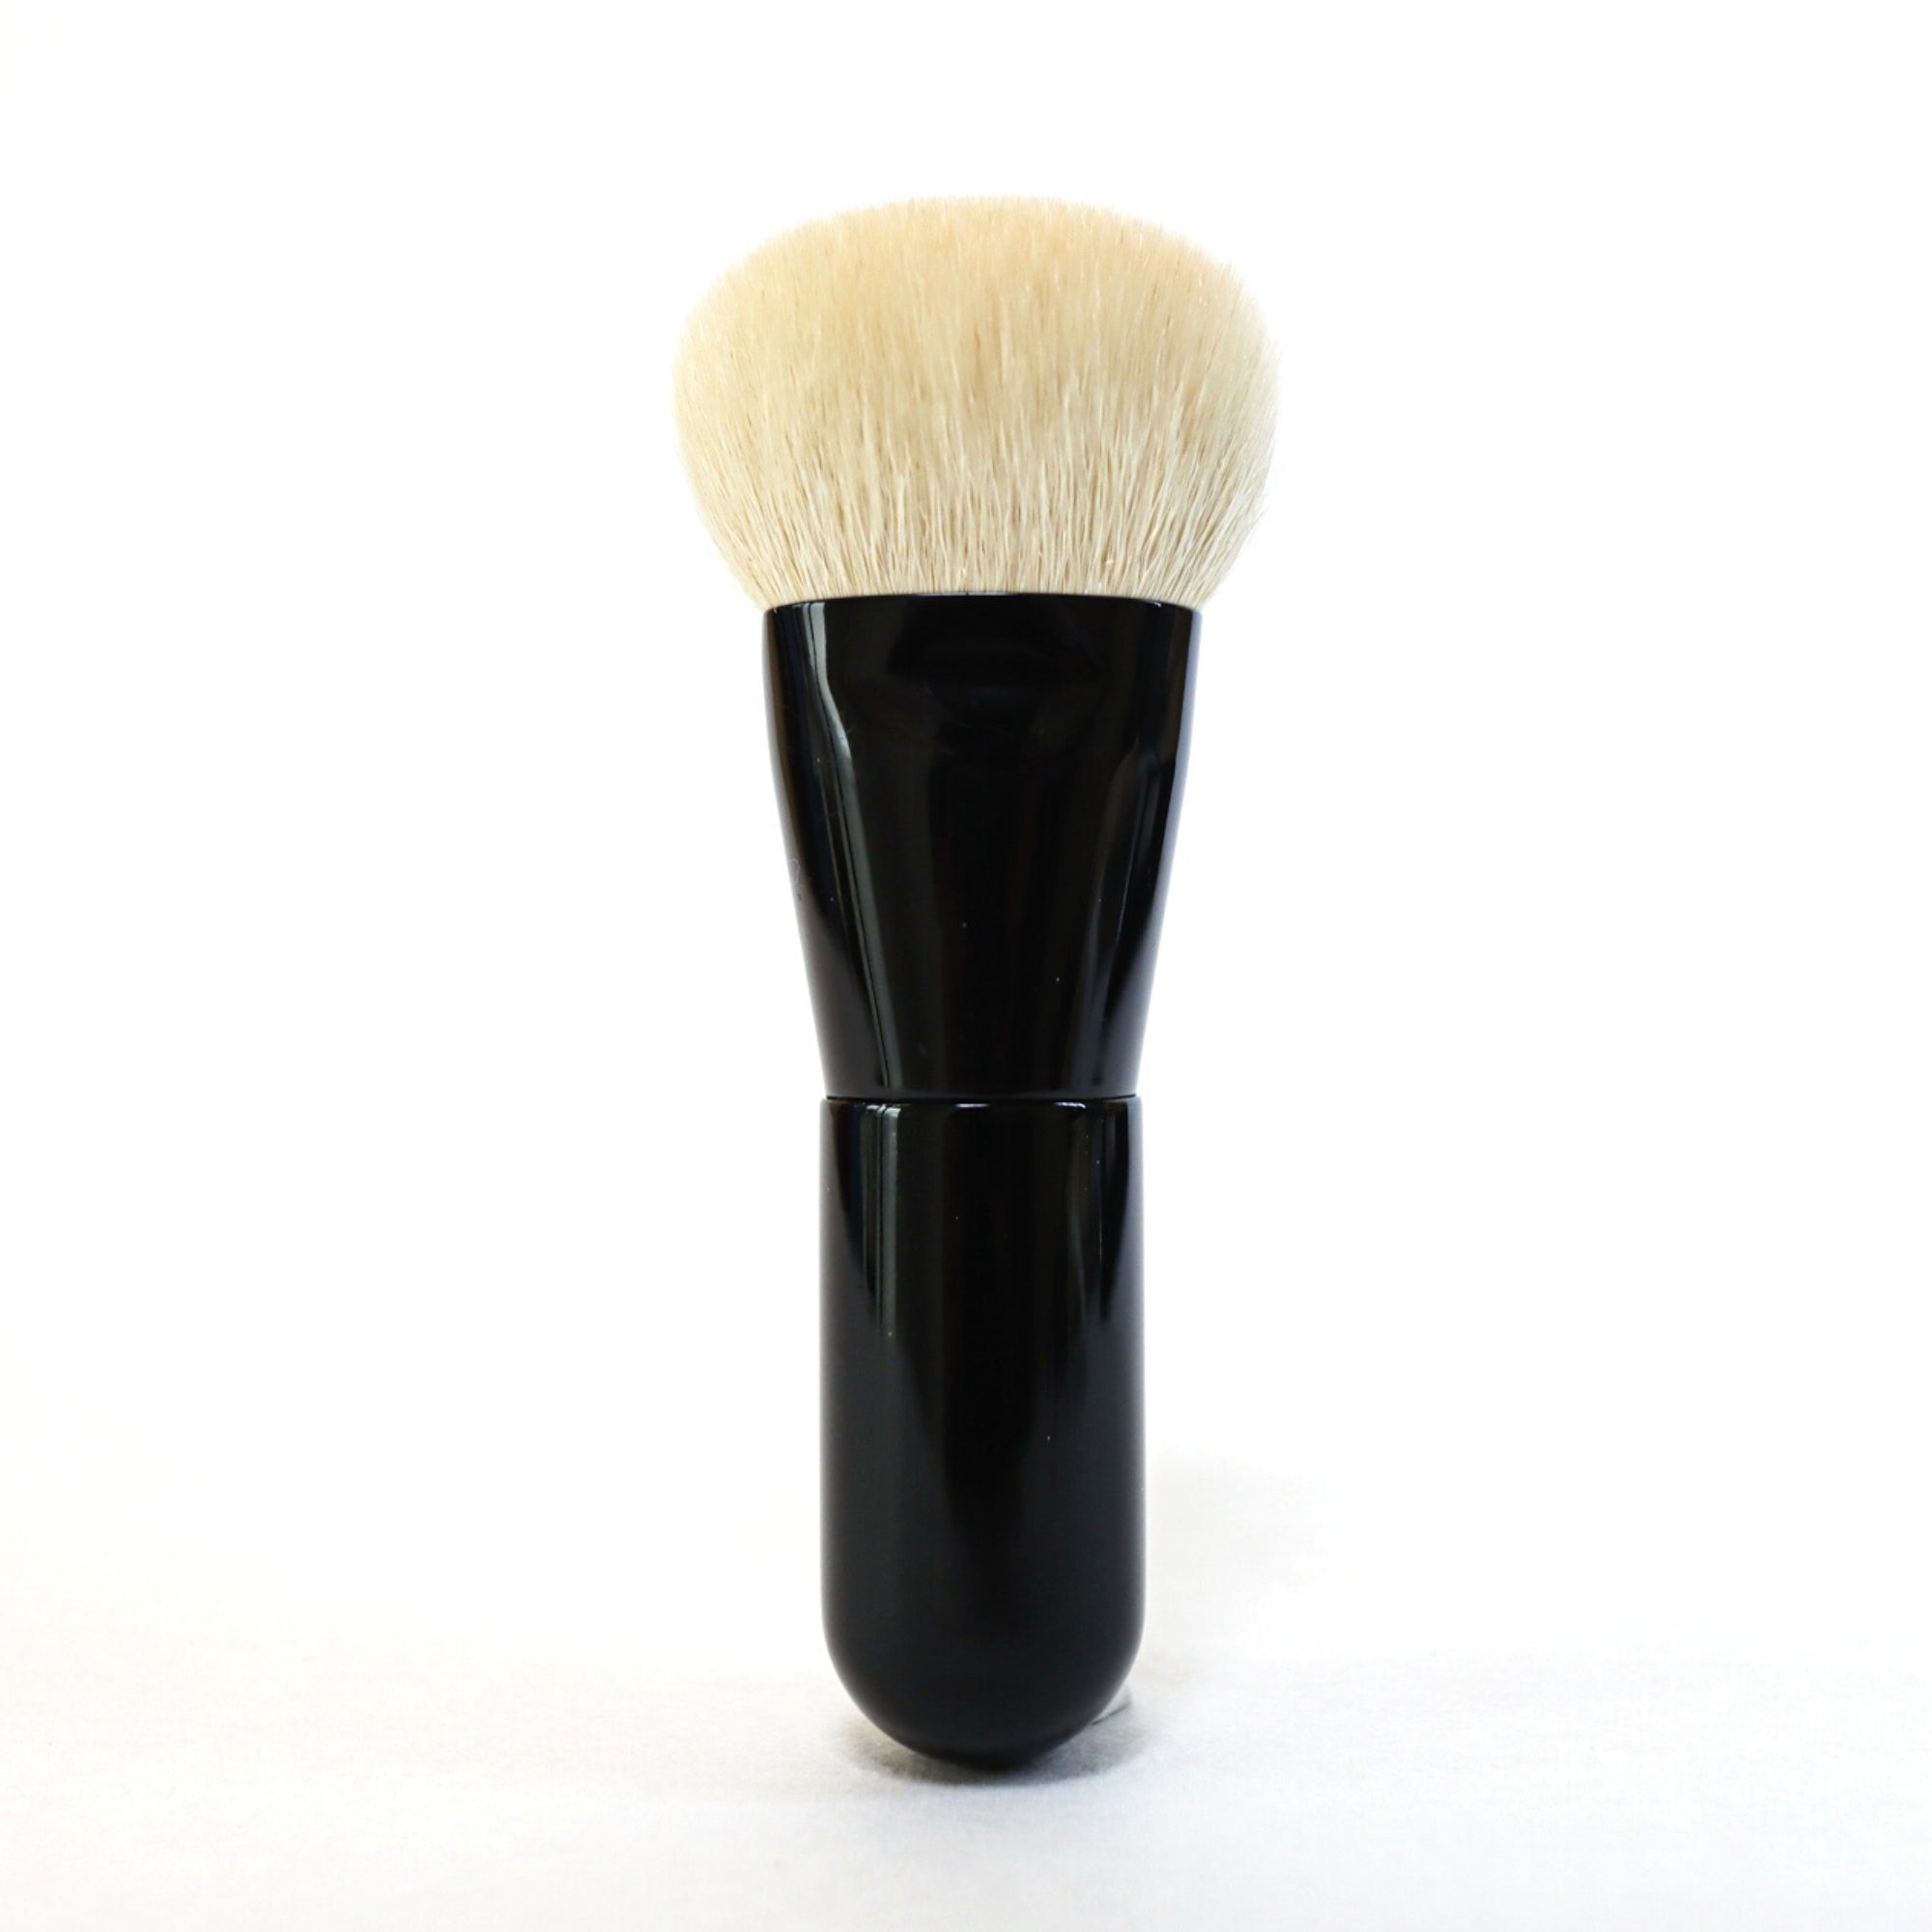 Koyudo Original Fupa-02 Brush REVIVAL (Pink/Black) - Fude Beauty, Japanese Makeup Brushes